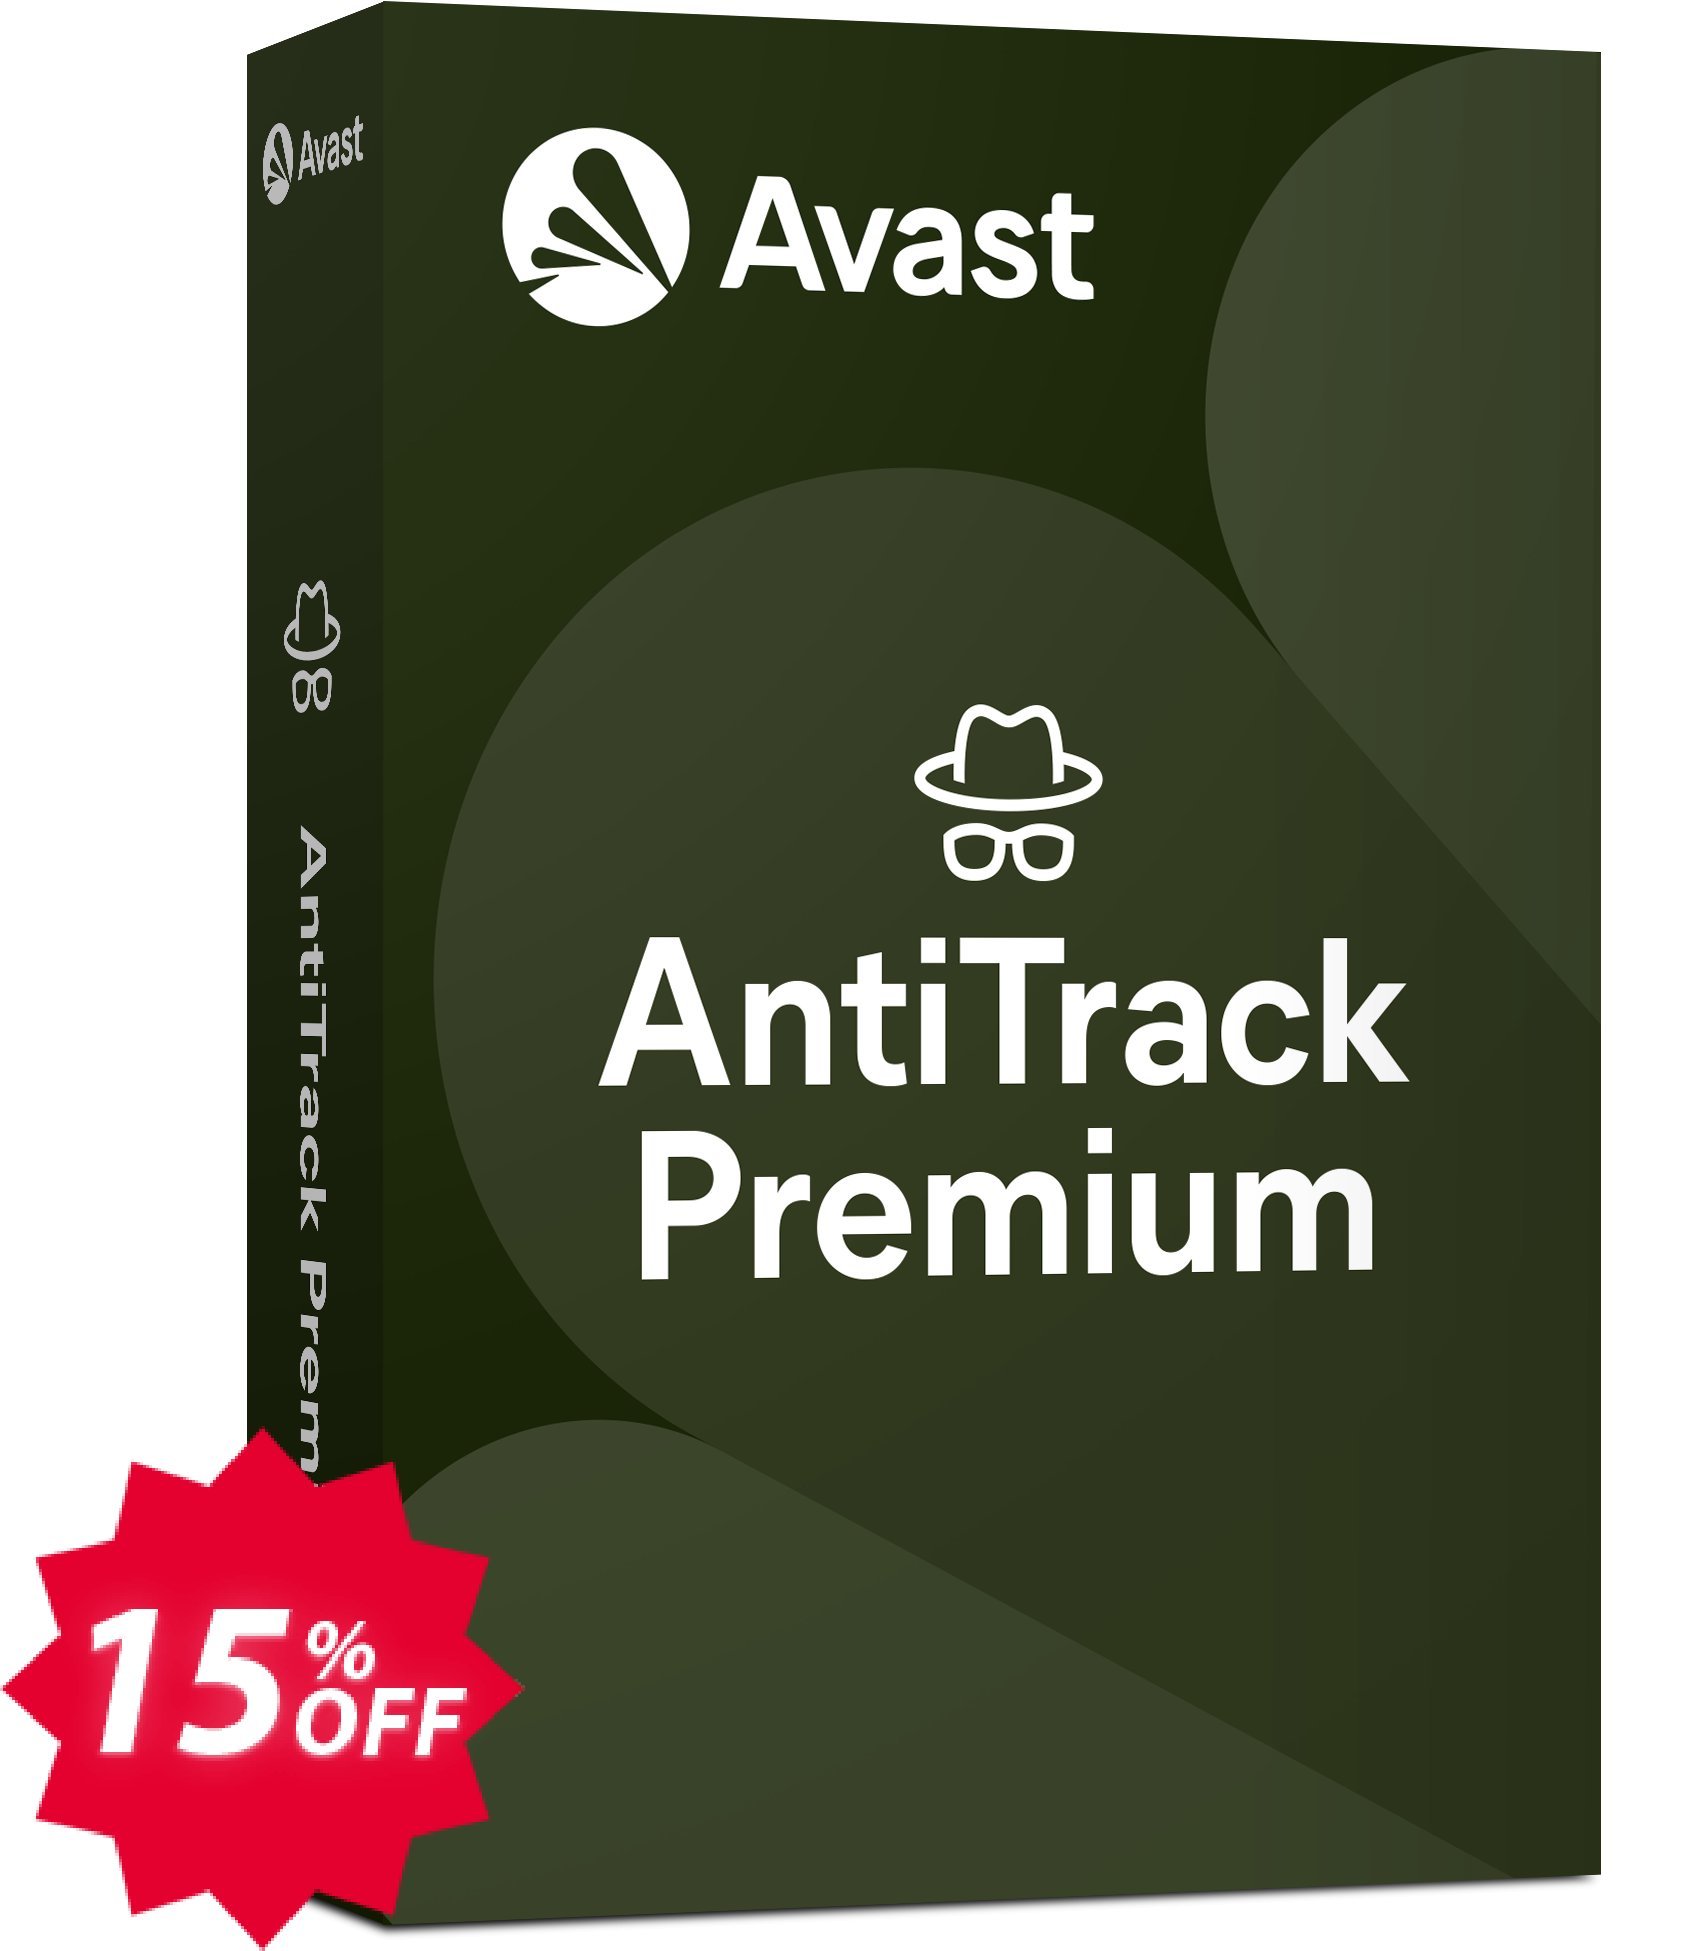 Avast AntiTrack Premium 10 device Coupon code 15% discount 